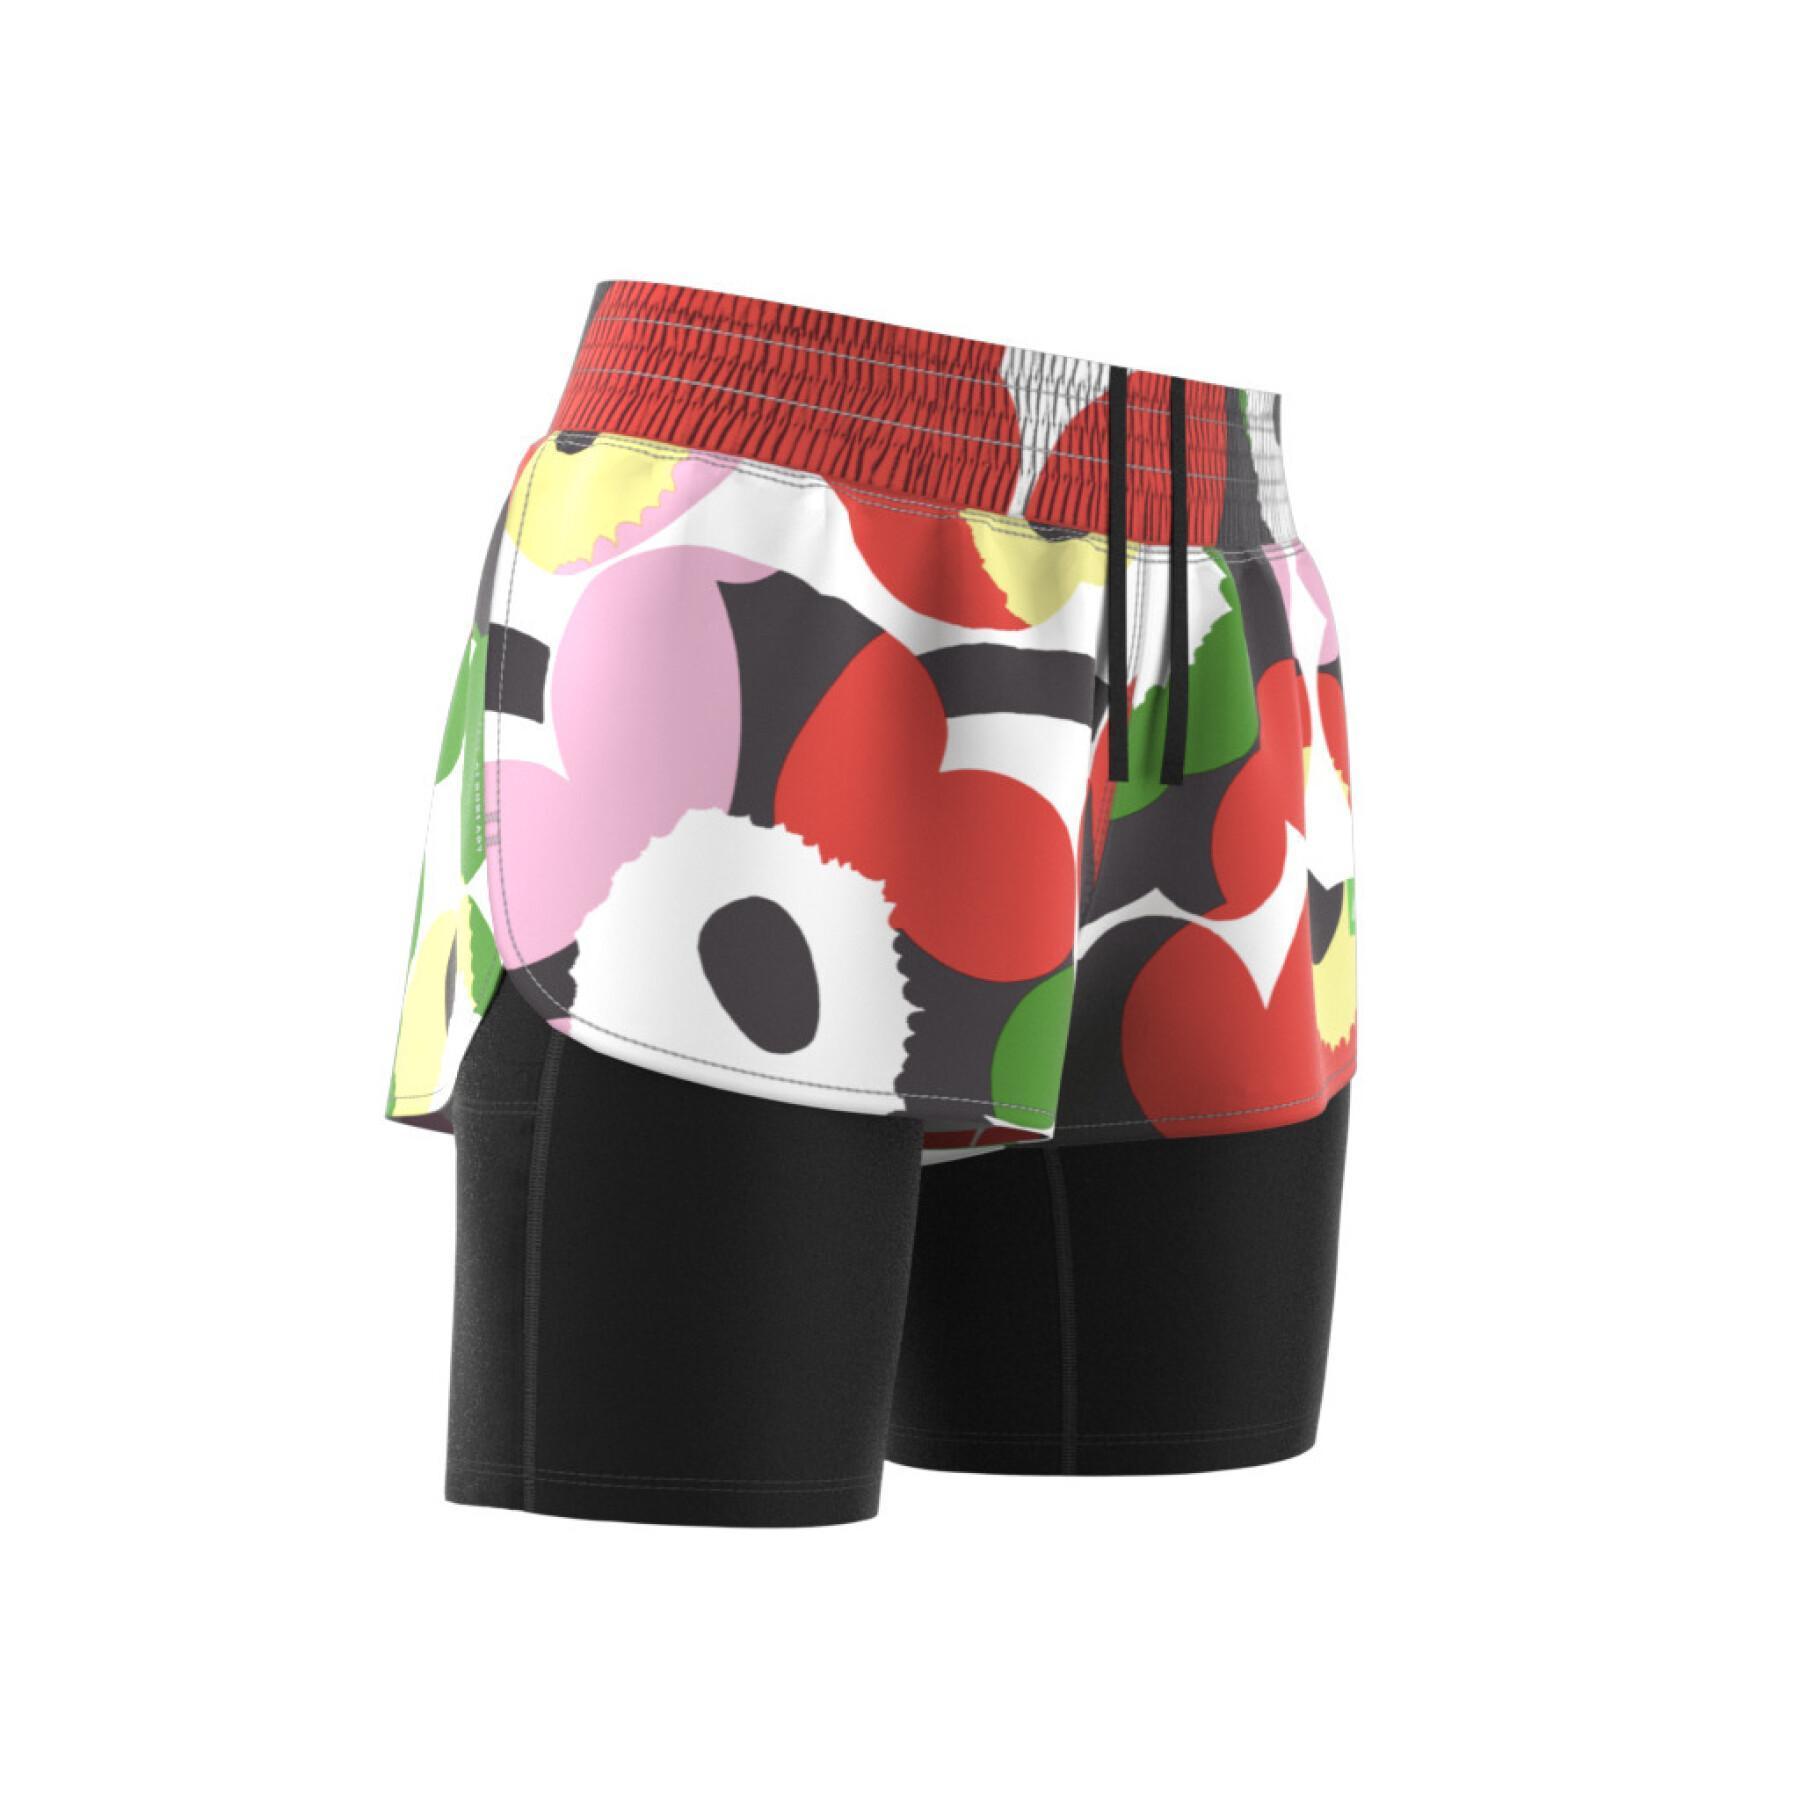 Pantalones cortos de mujer adidas Marimekko x